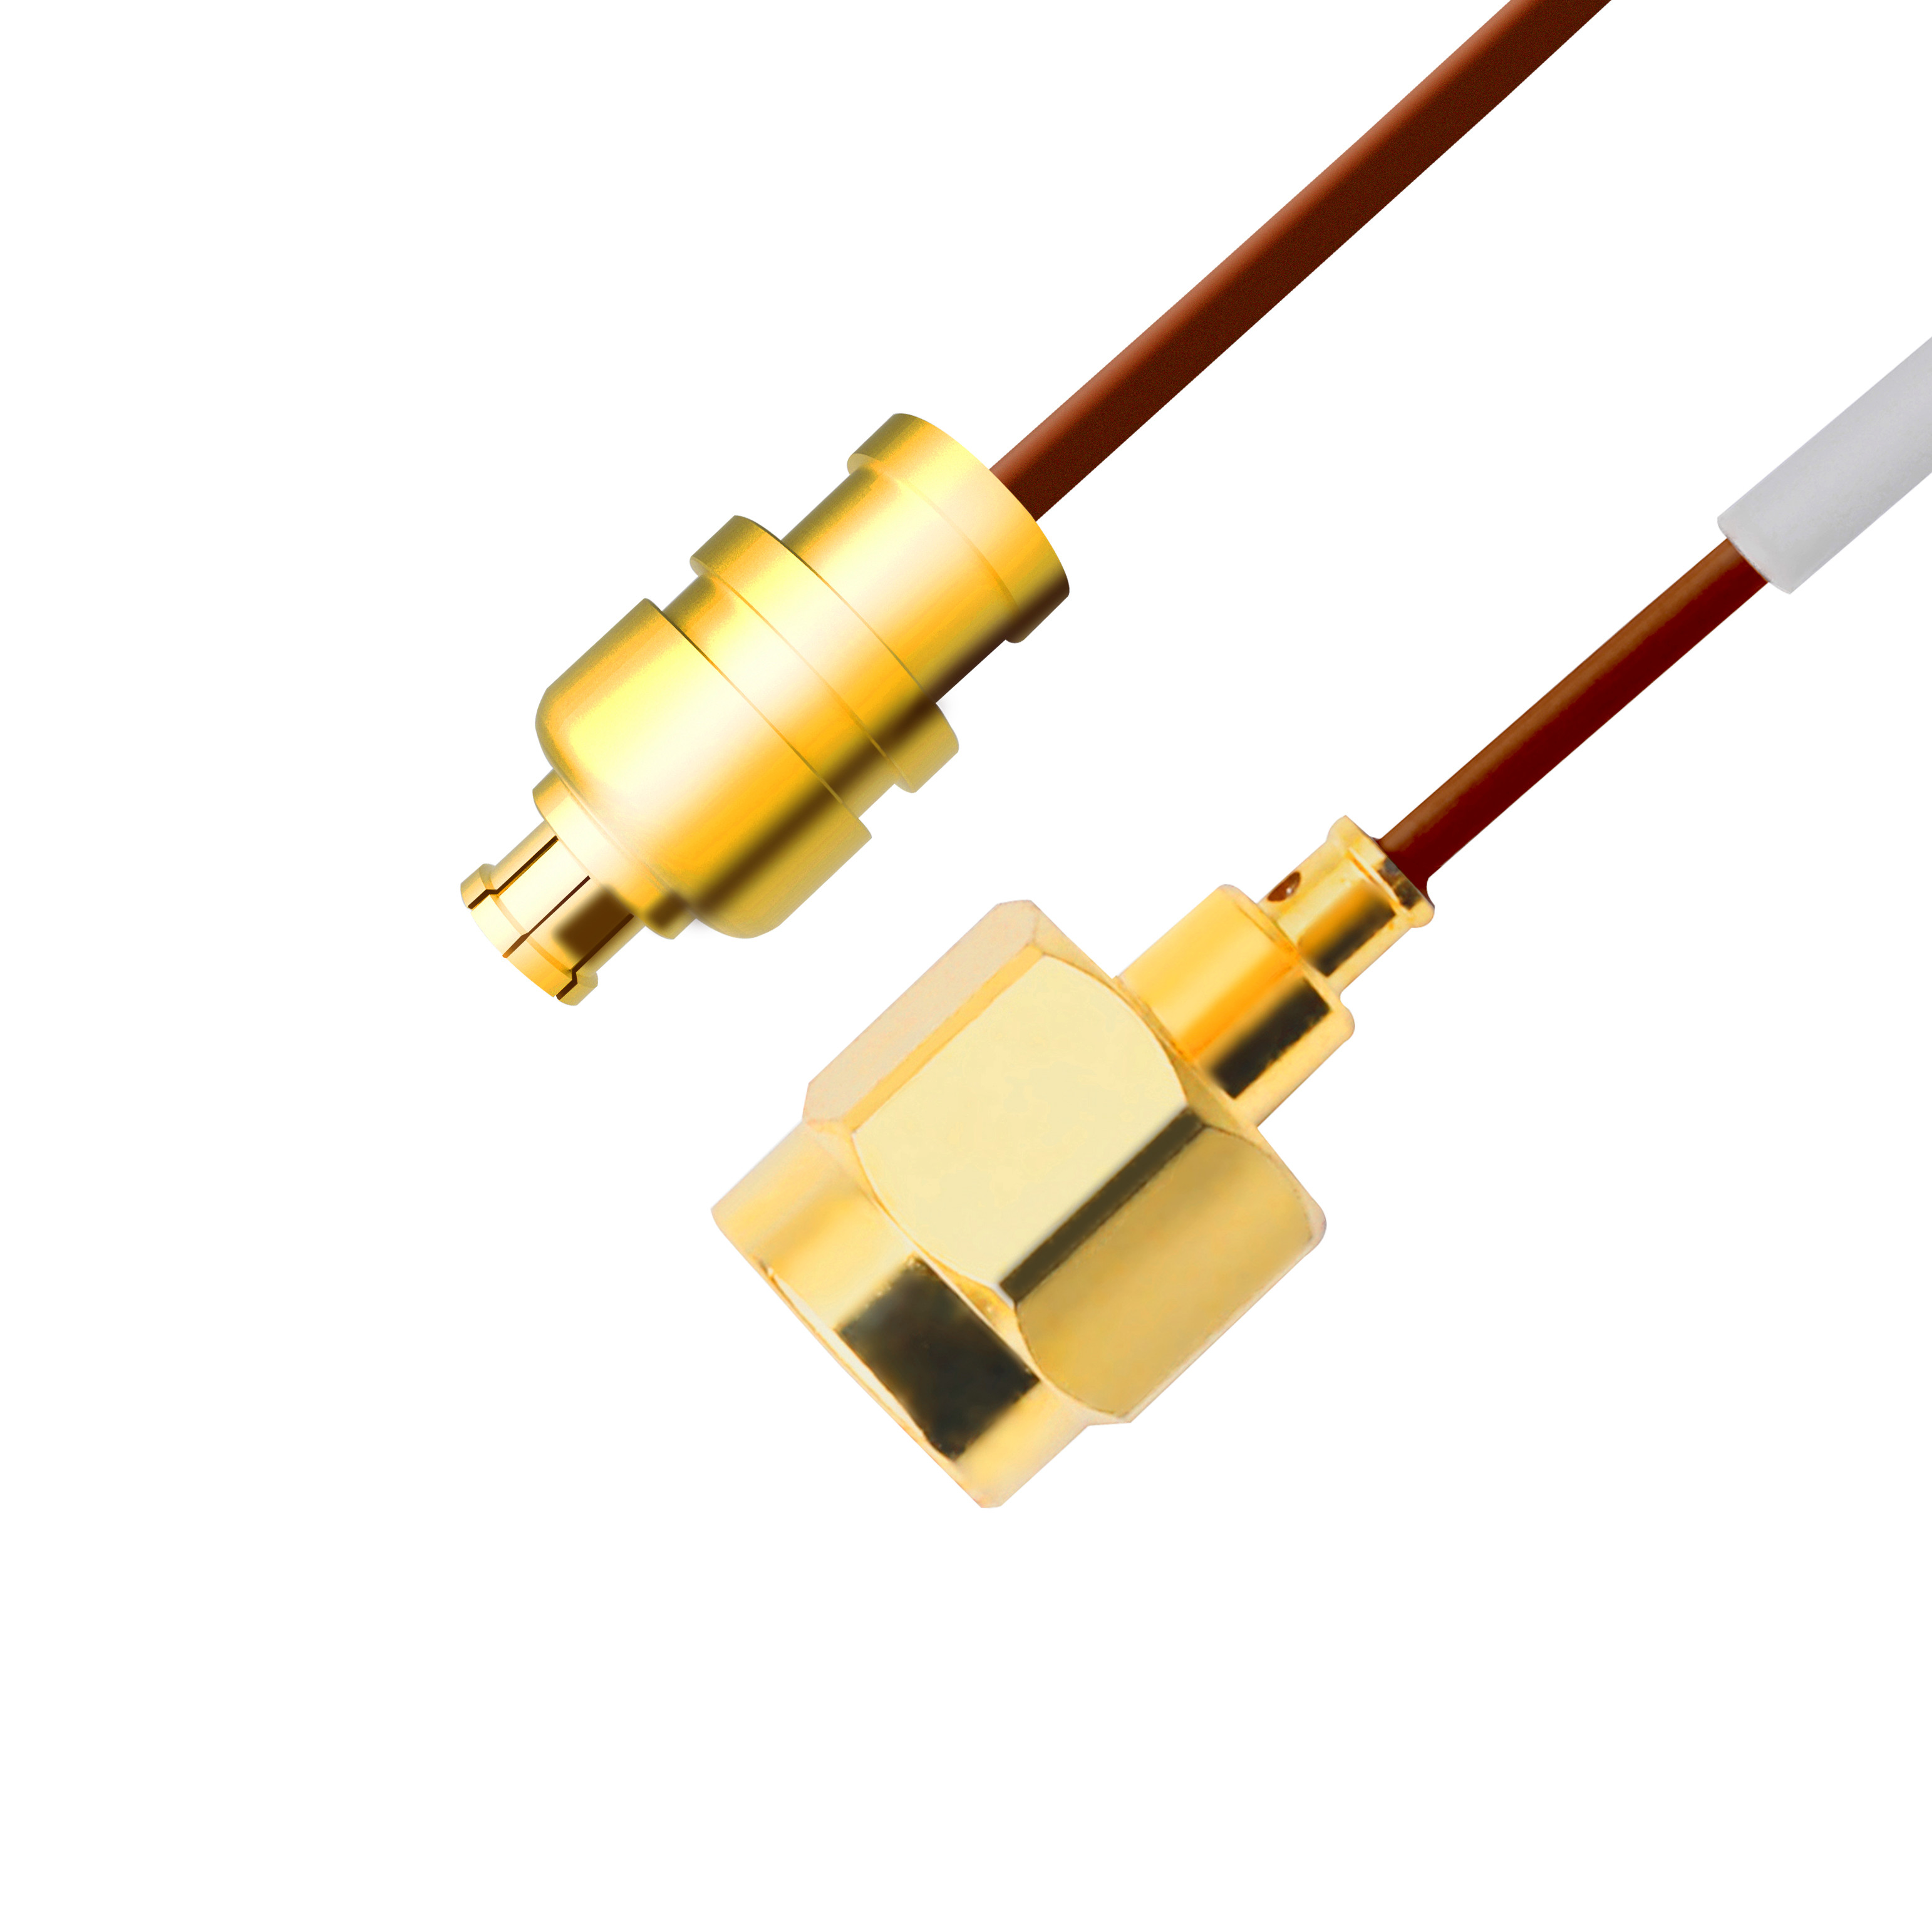 Buy 0.047 5G Semi Rigid Coax Cable Sma Male Straight Plug Te 1996771-1 To Smpm Female Jack at wholesale prices